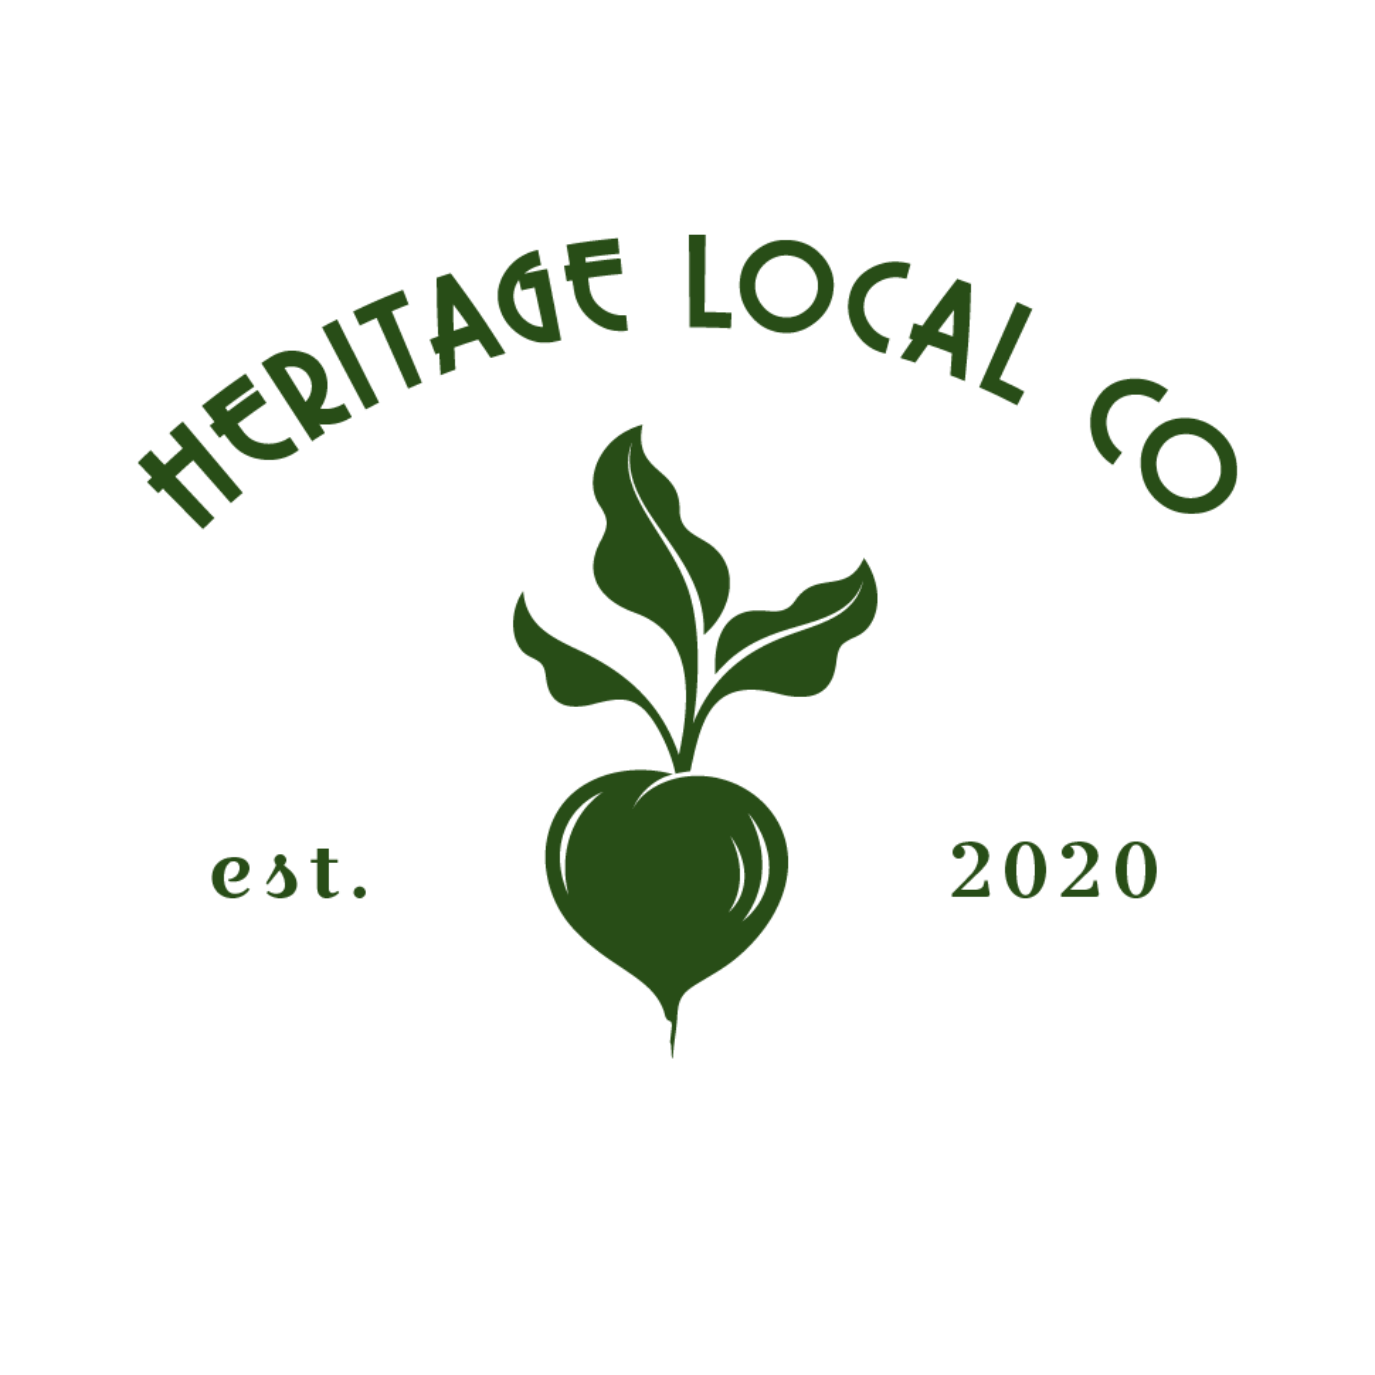 Heritage Local Co. - NorthPlatte Logo